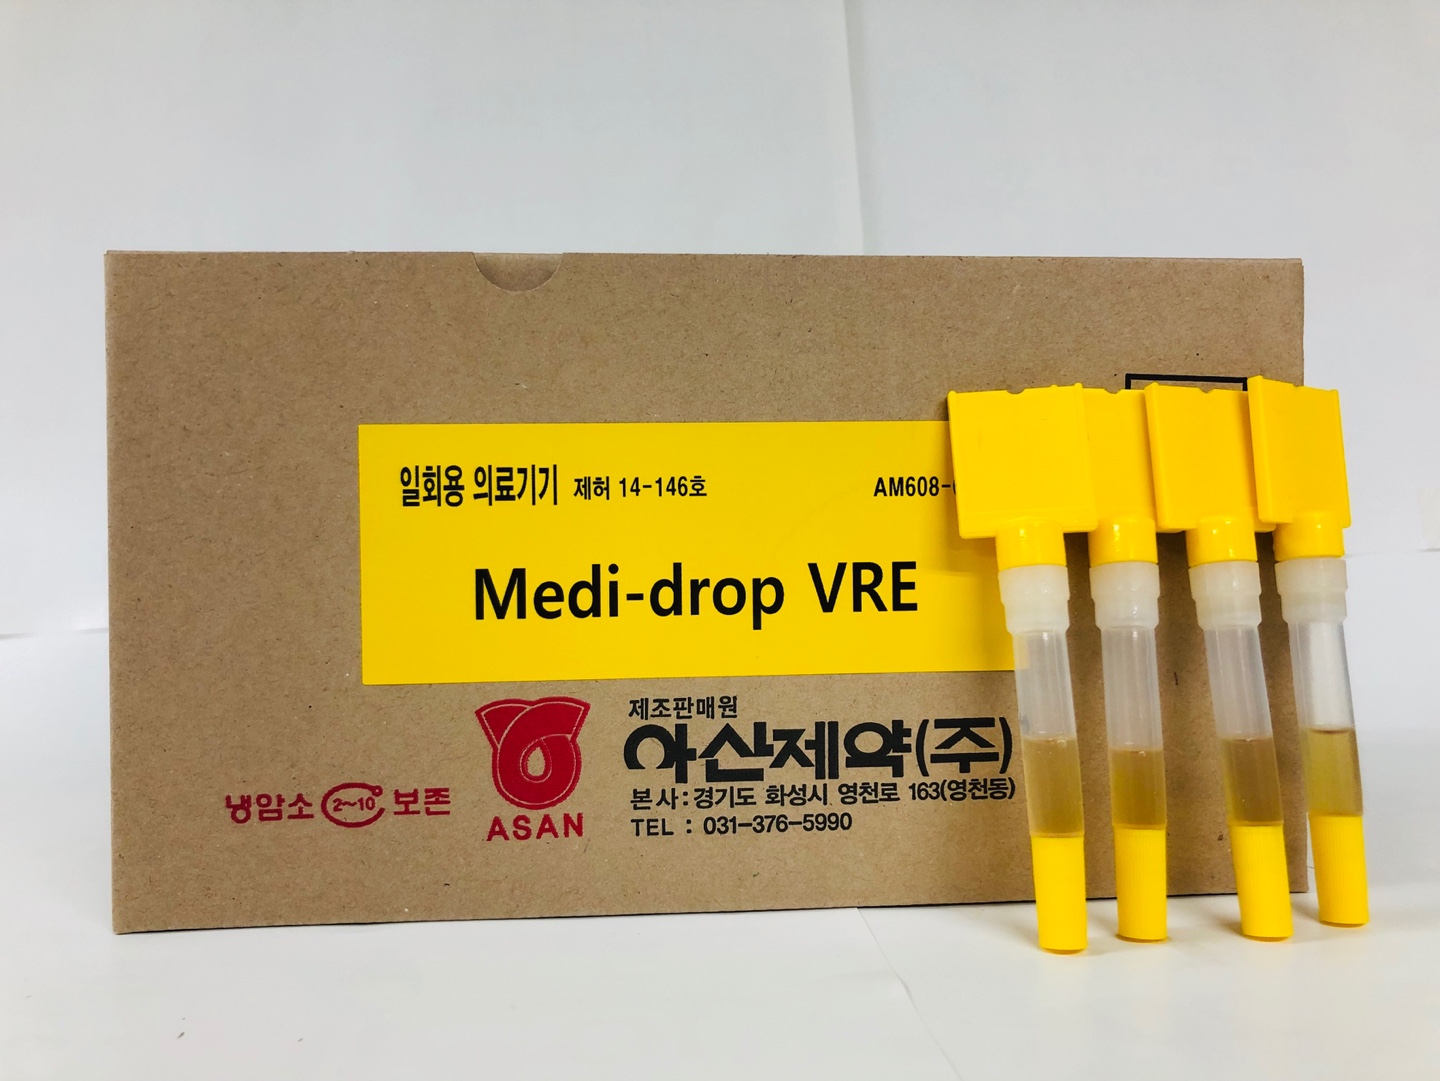 Medi-drop VRE